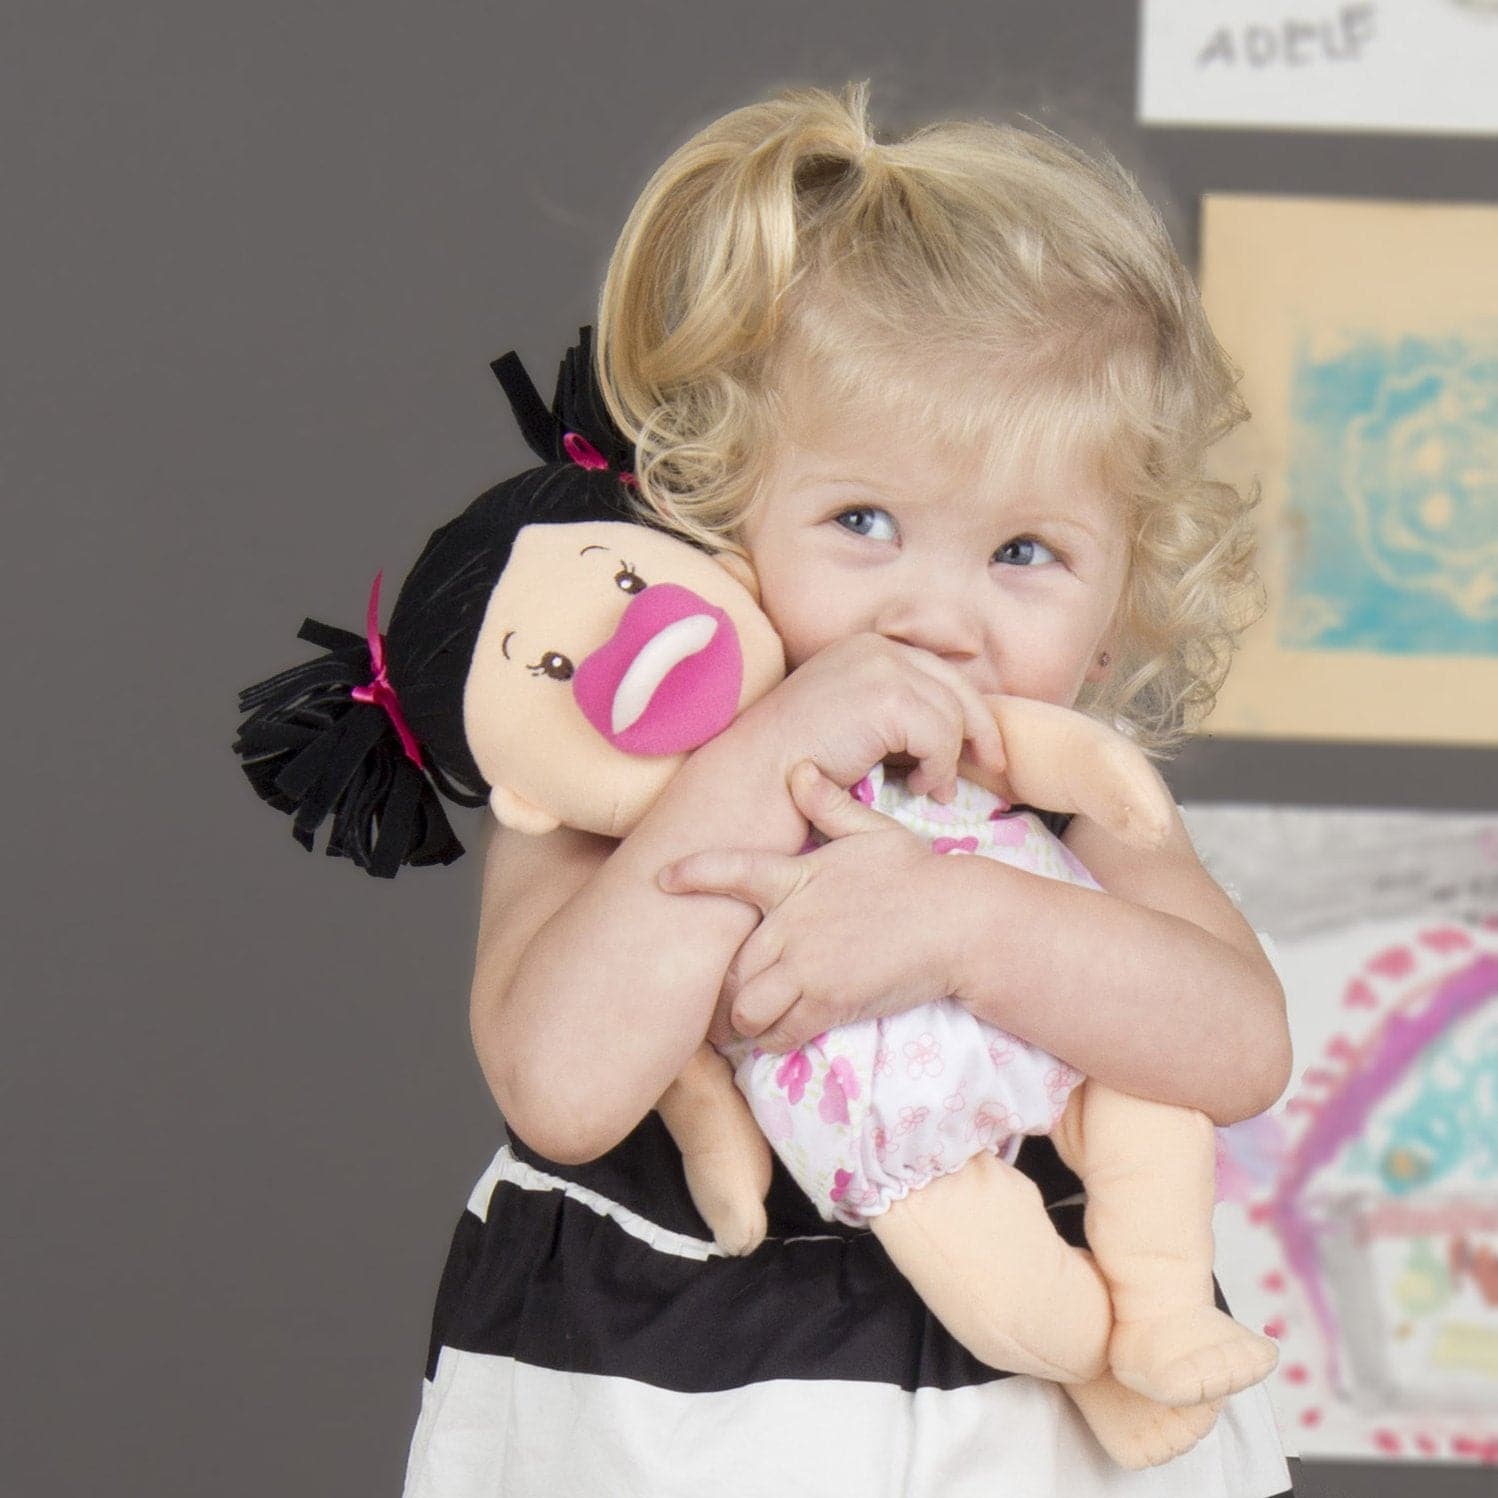 Manhattan Toy-Baby Stella Doll - Brunette Doll-153000-Legacy Toys